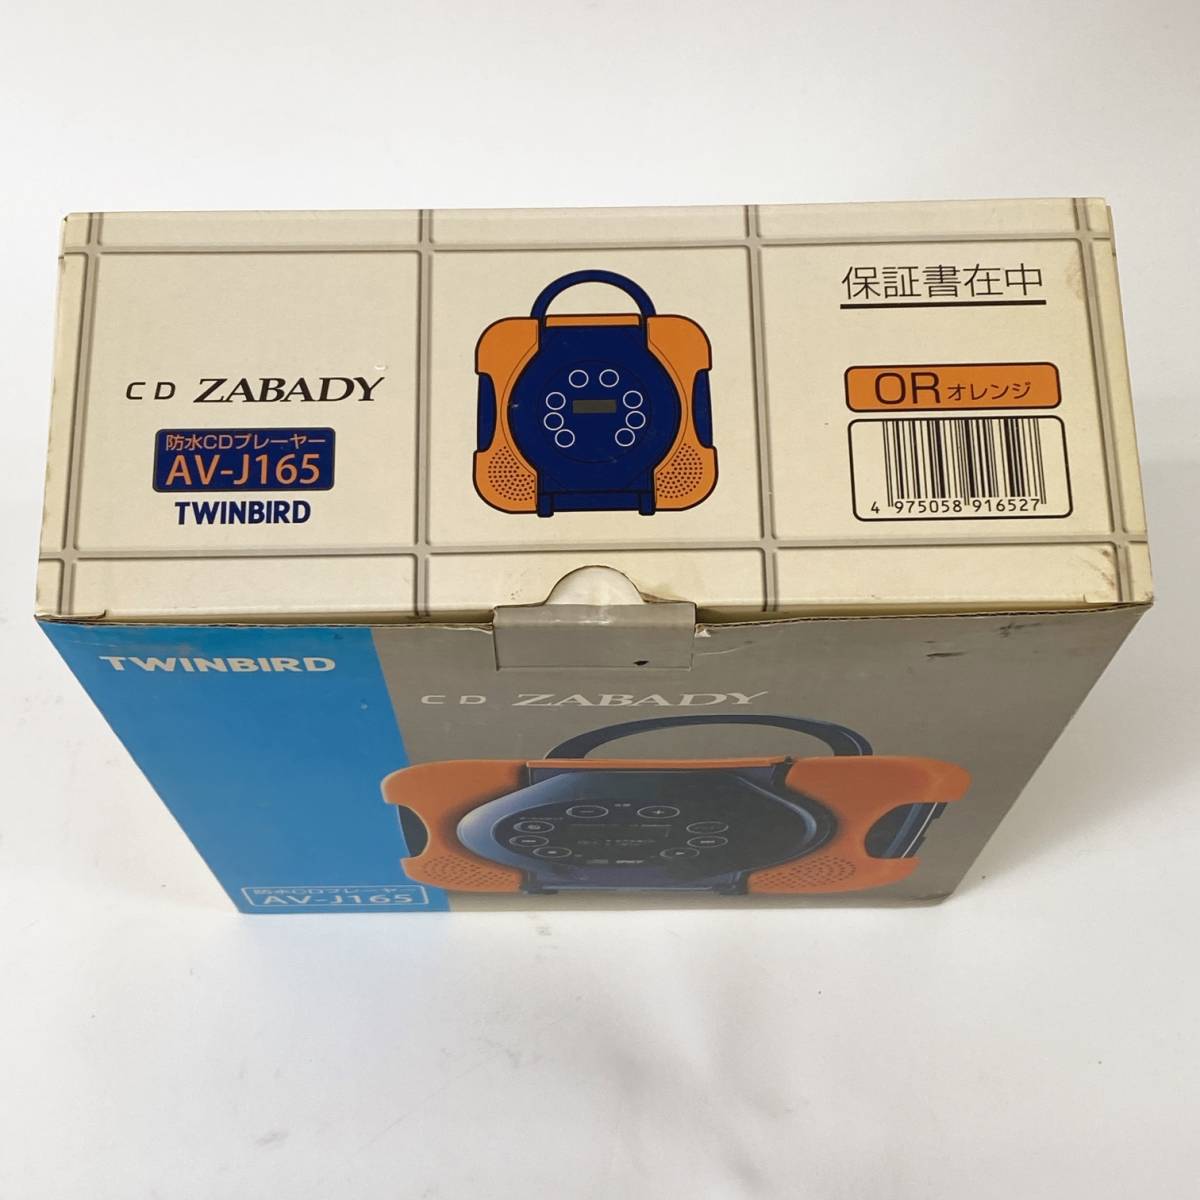 TWINBIRD/ Twin Bird водонепроницаемый CD плеер CD ZABADY AV-J165 orange с коробкой электризация проверка б/у товар 24b.E